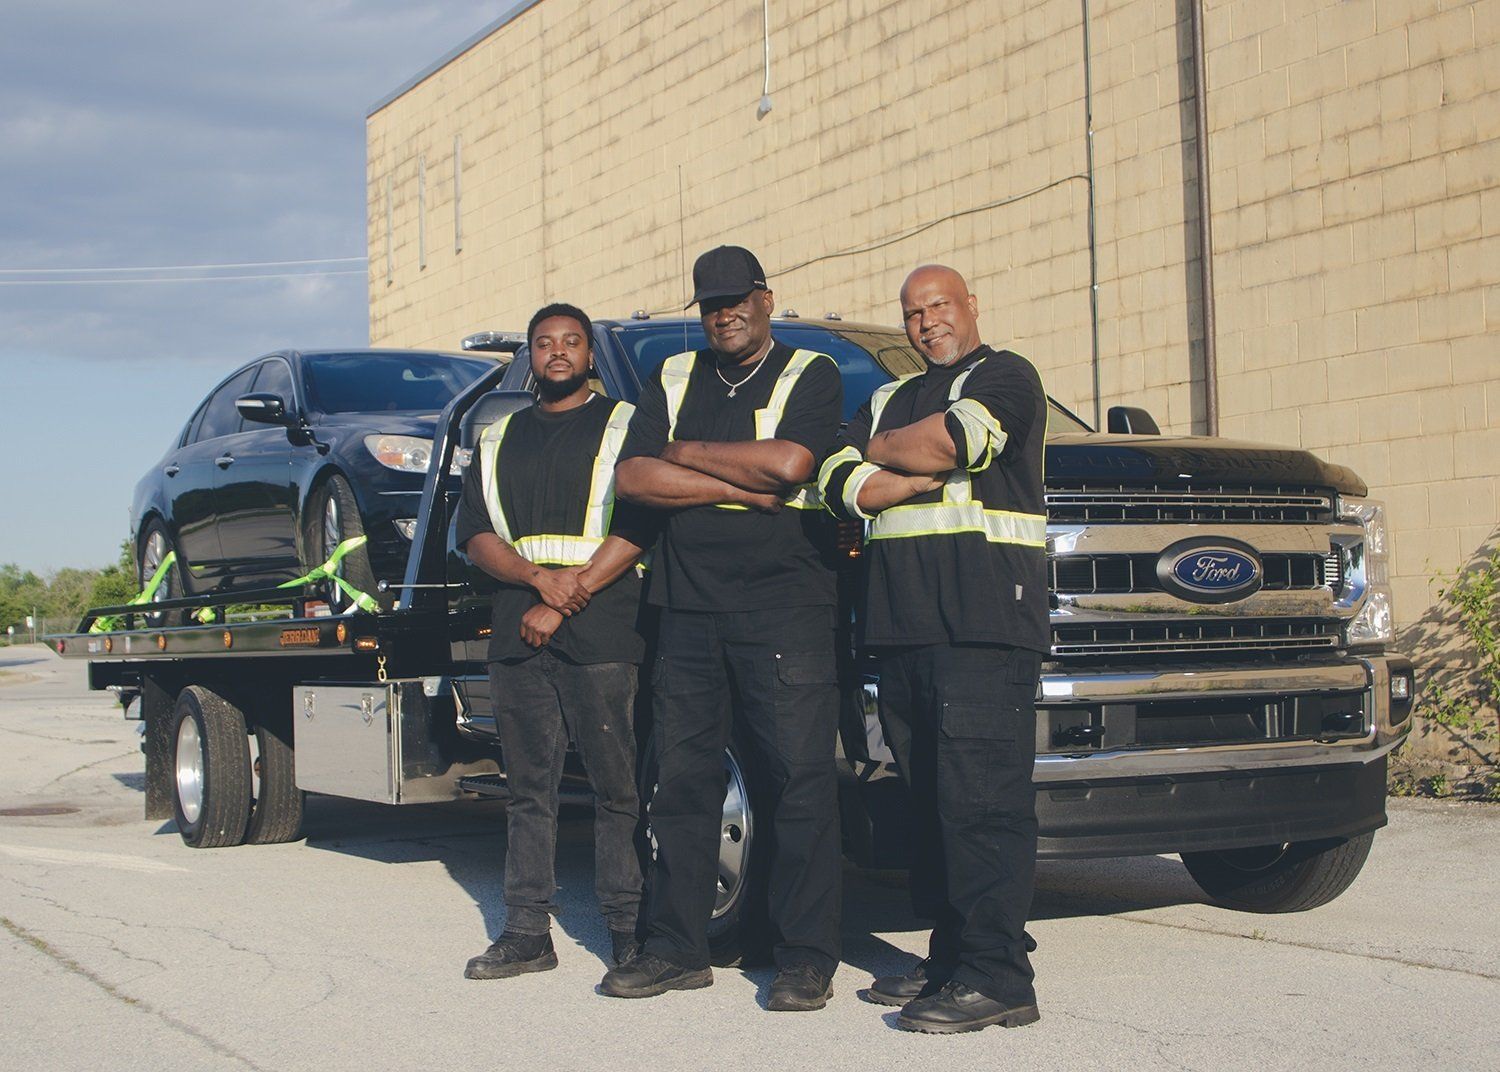 Tow truck drivers posing — Olympia Fields, IL — Burskgroup Enterprise LLC